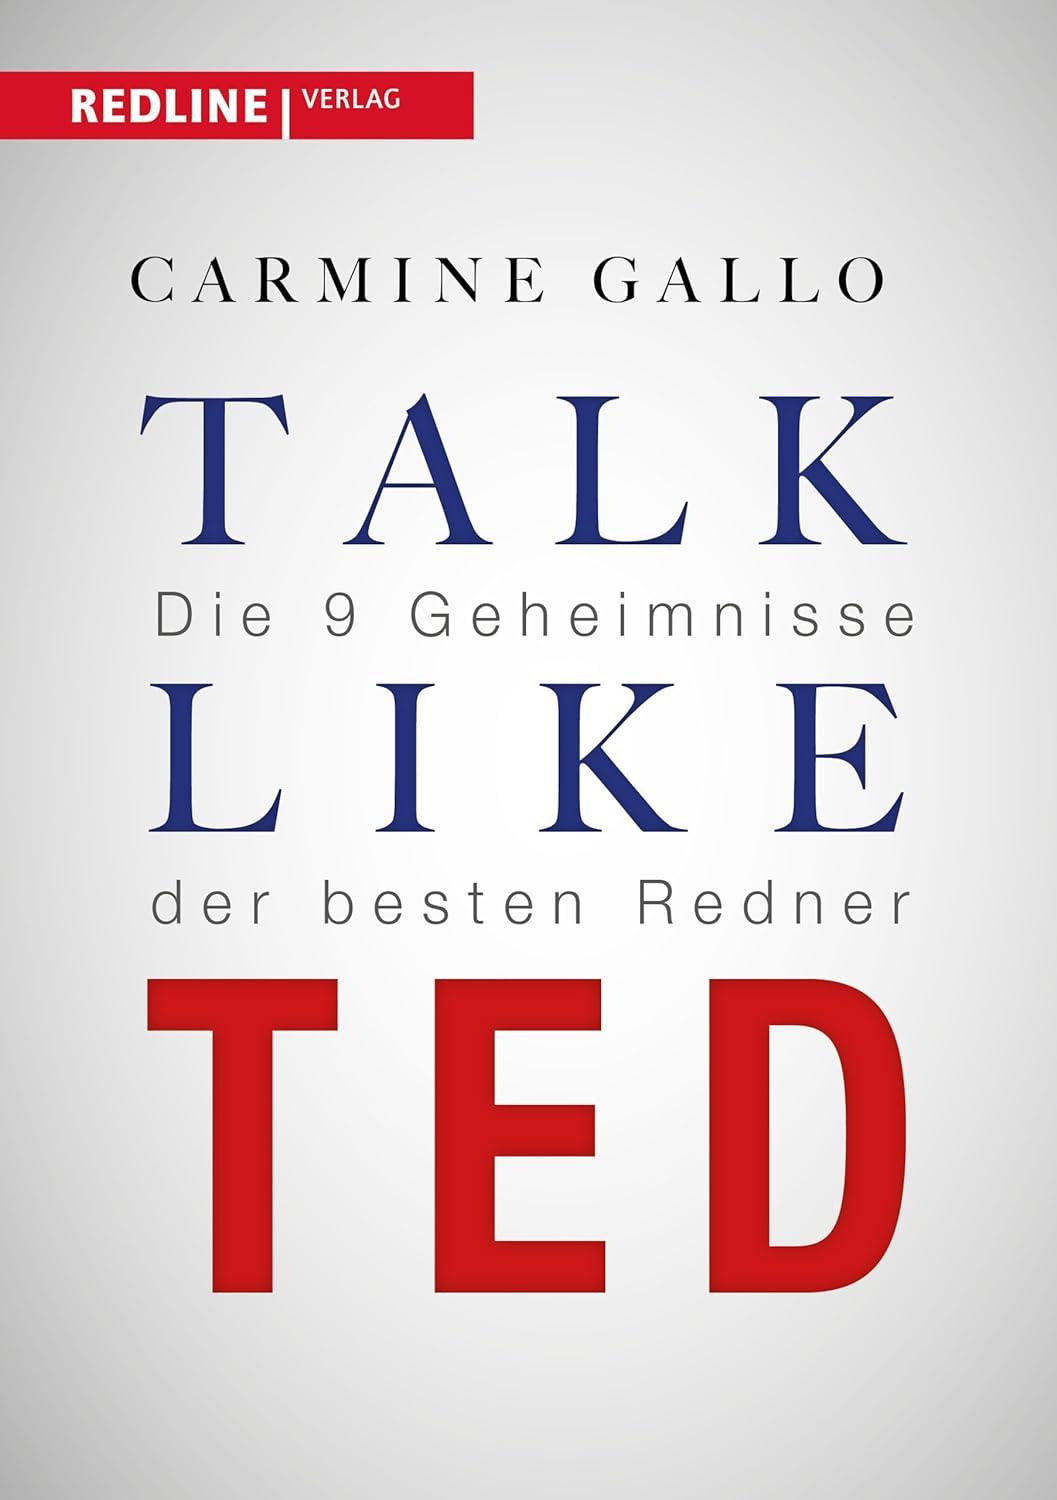 Talk like TED by Carmine Gallo - Bookstagram